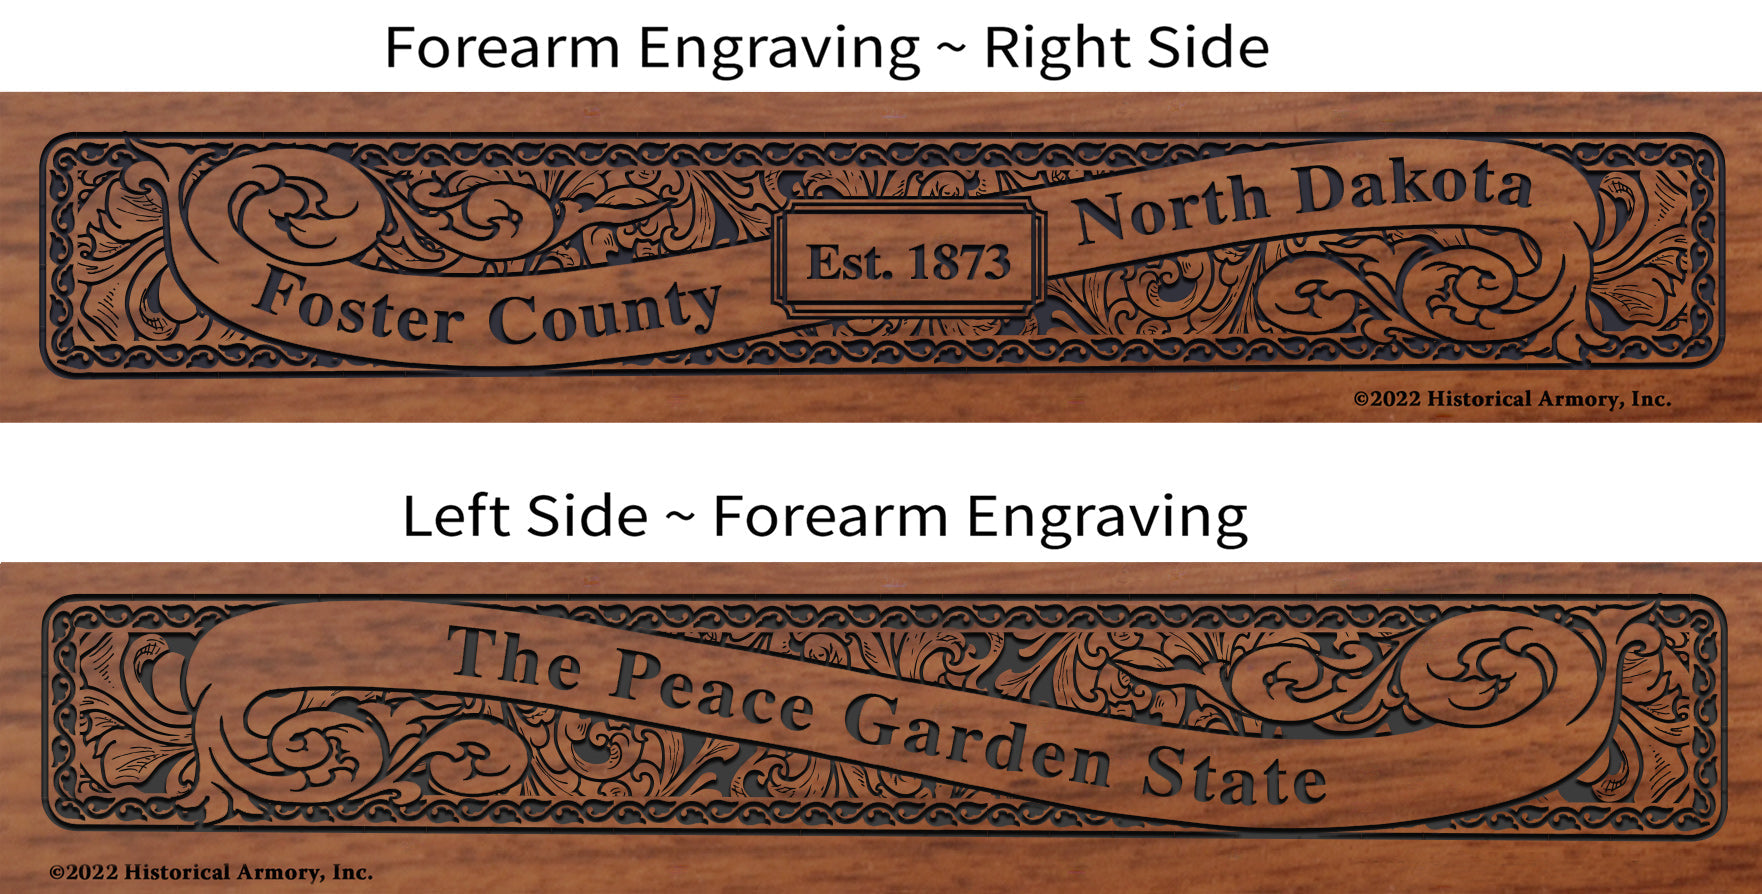 Foster County North Dakota Engraved Rifle Forearm